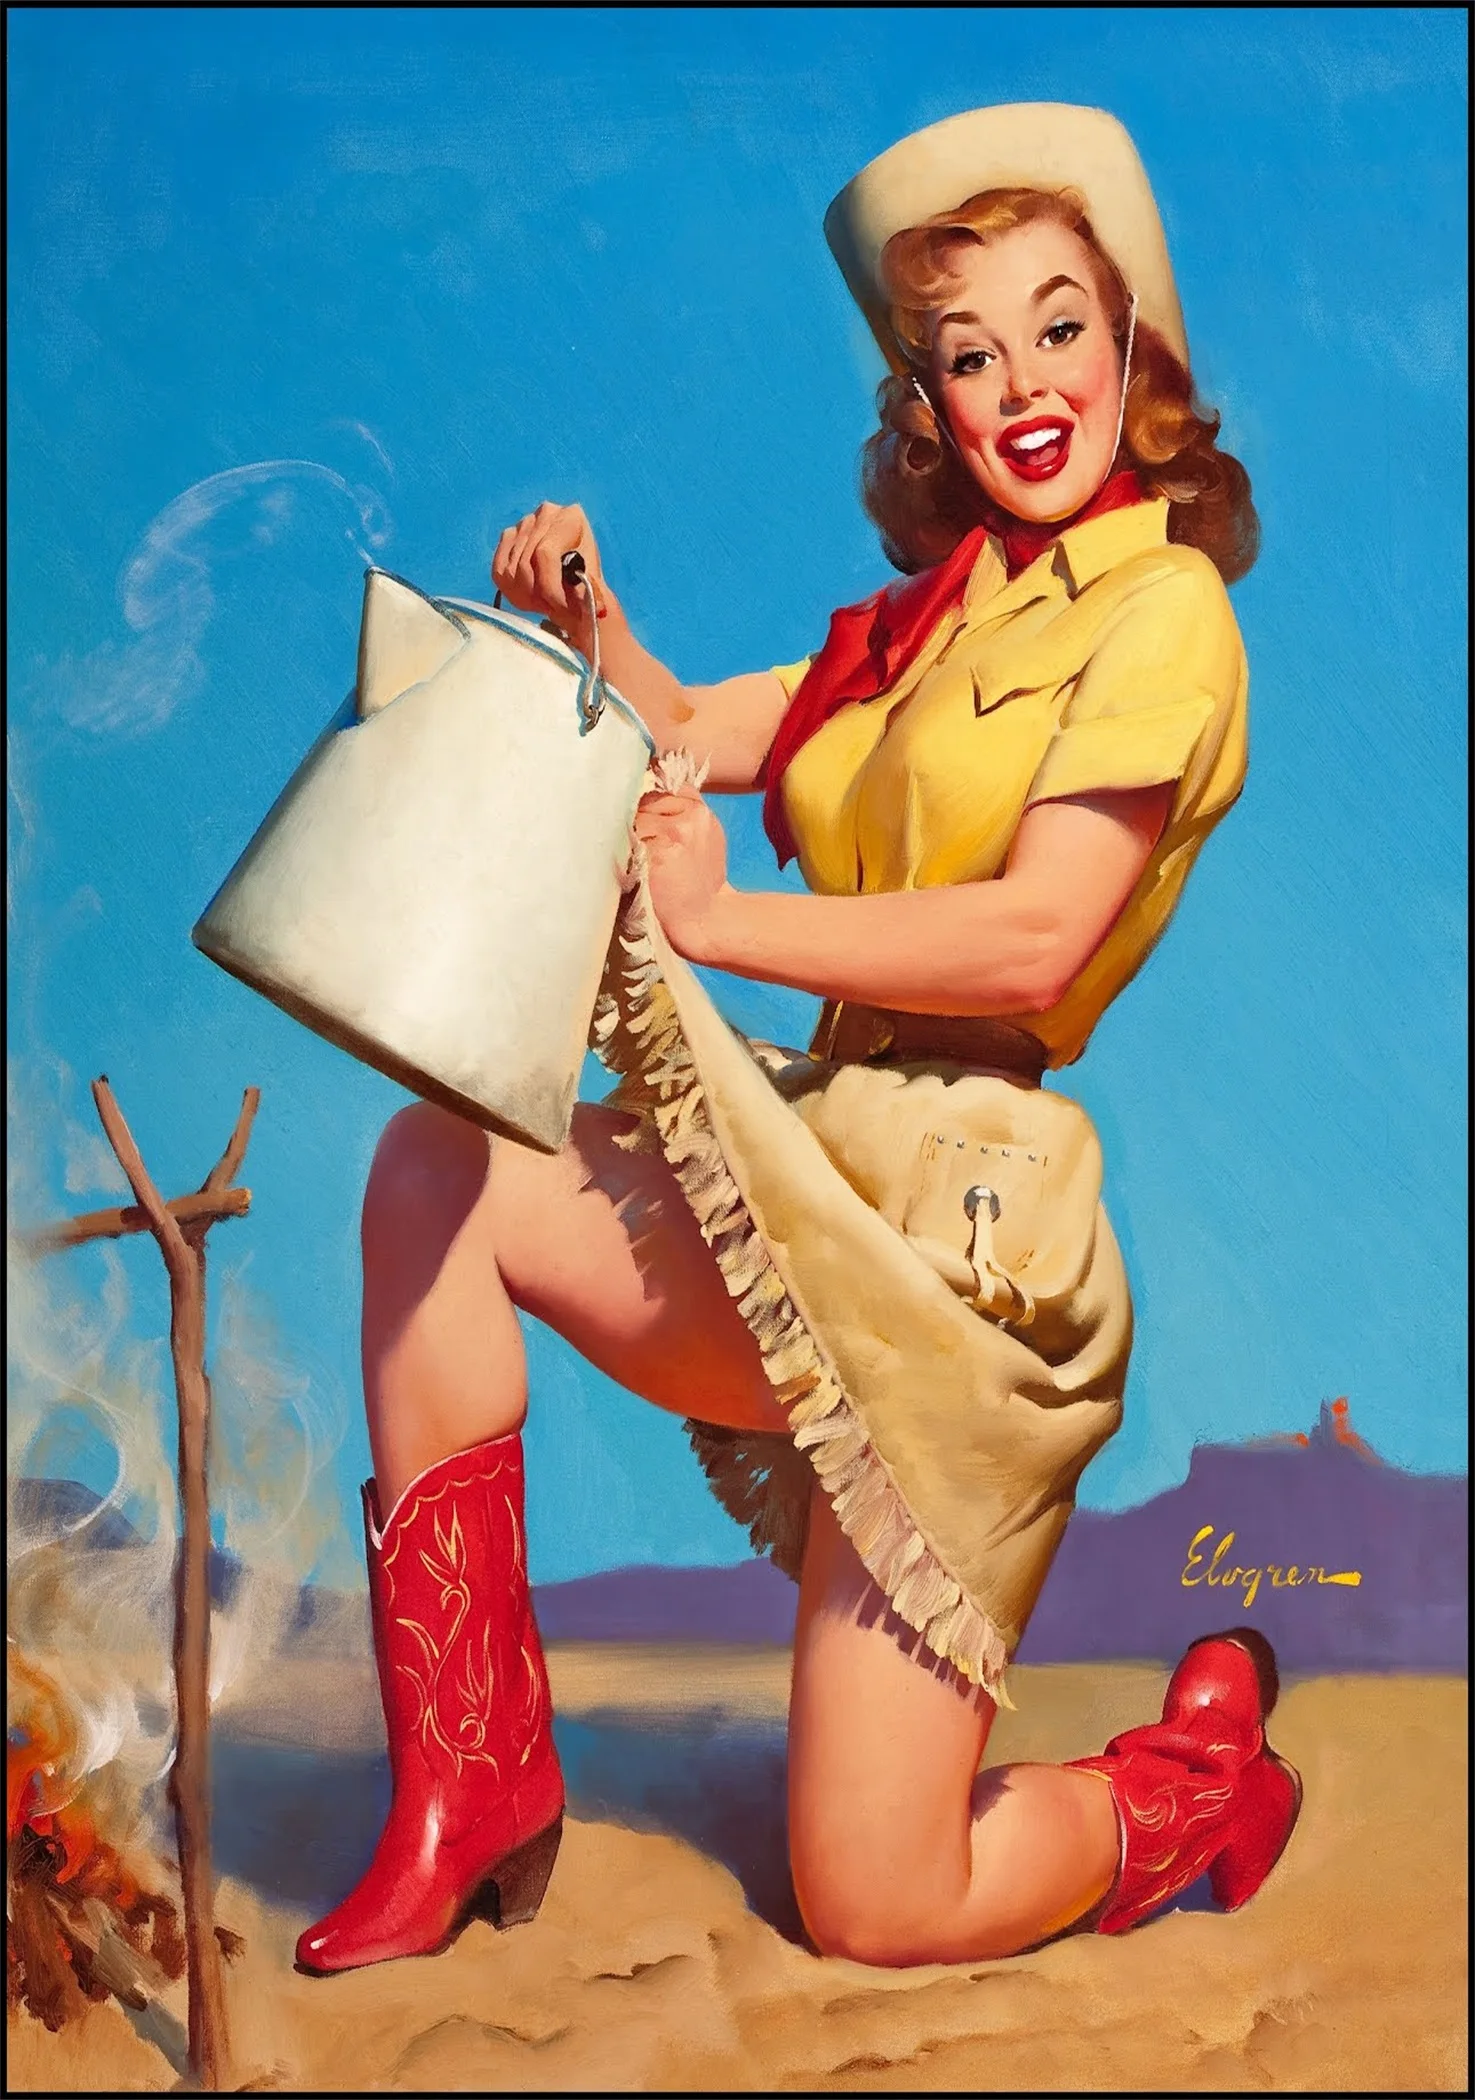 Dairyman Sexy Pin Up Girl Pop Art Propaganda Retro Vintage Kraft Poster